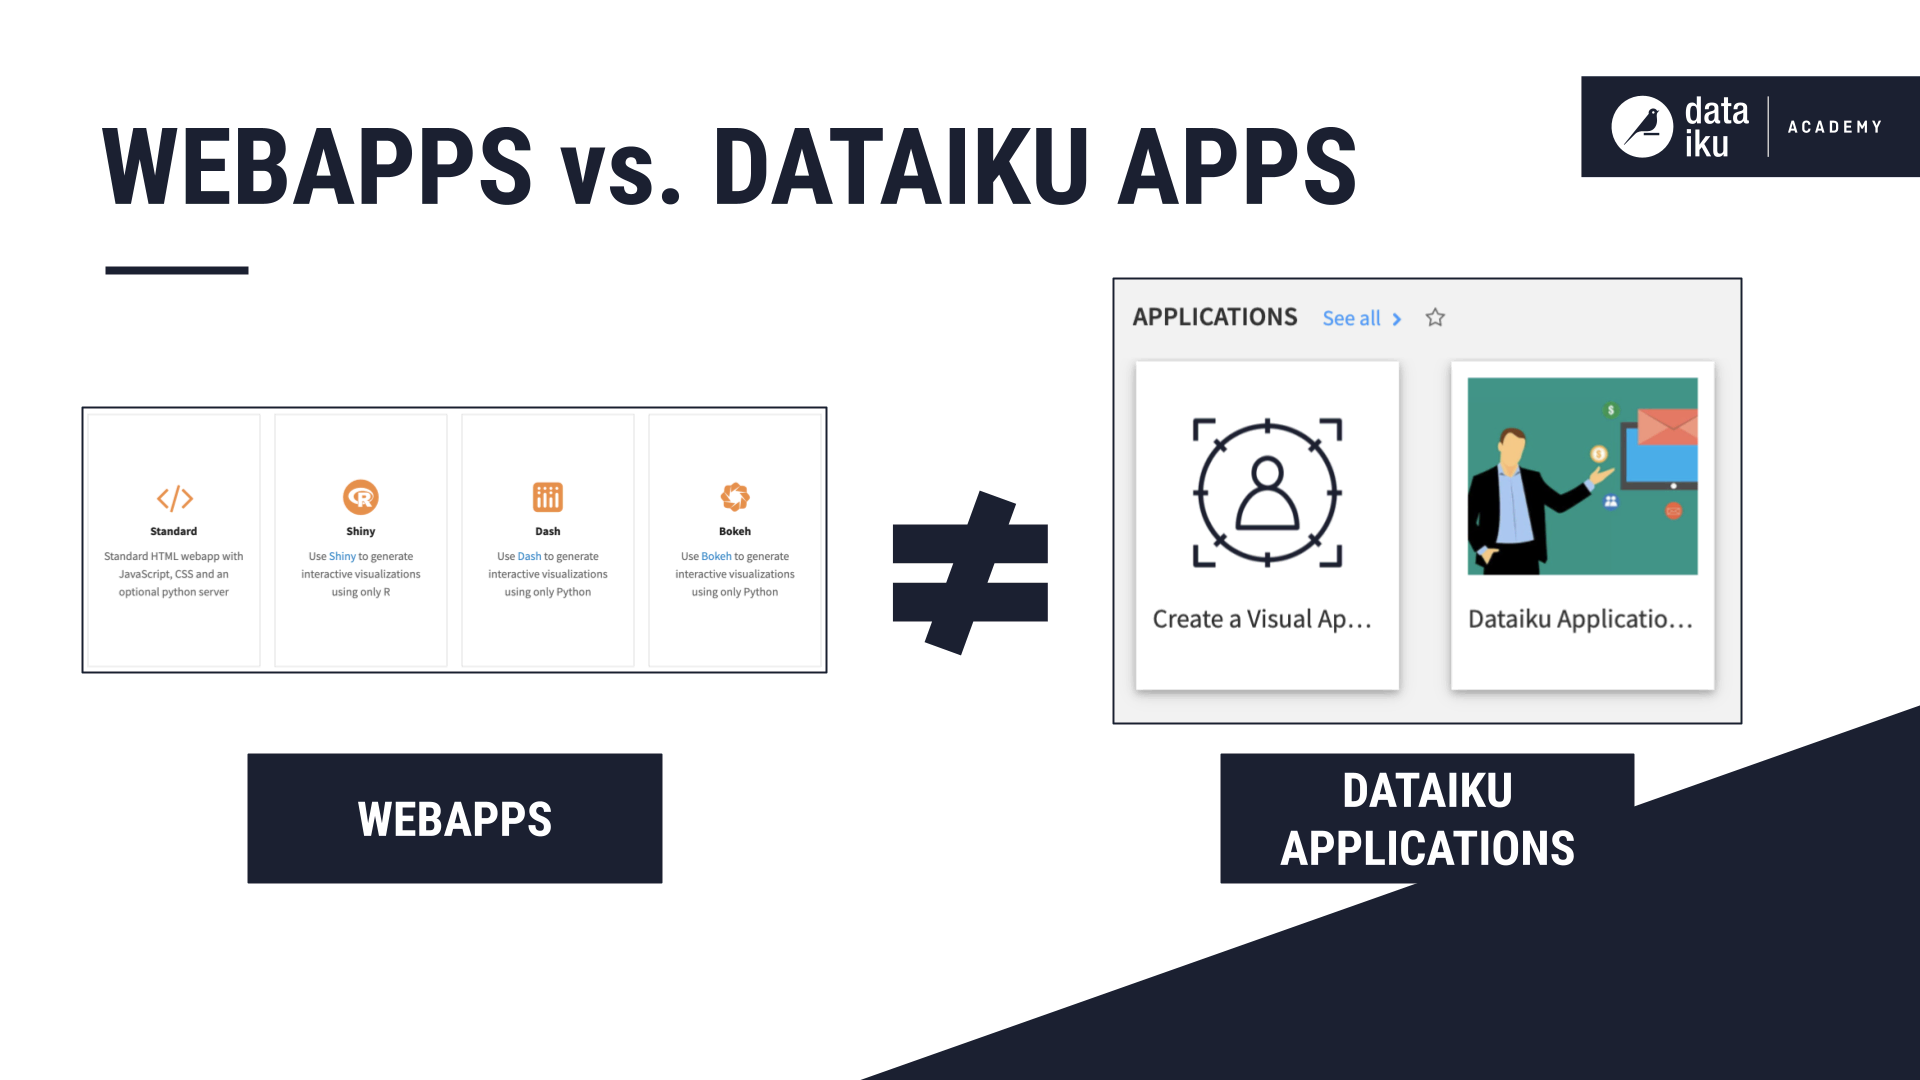 ../../_images/webapps-vs-dataiku-apps.png